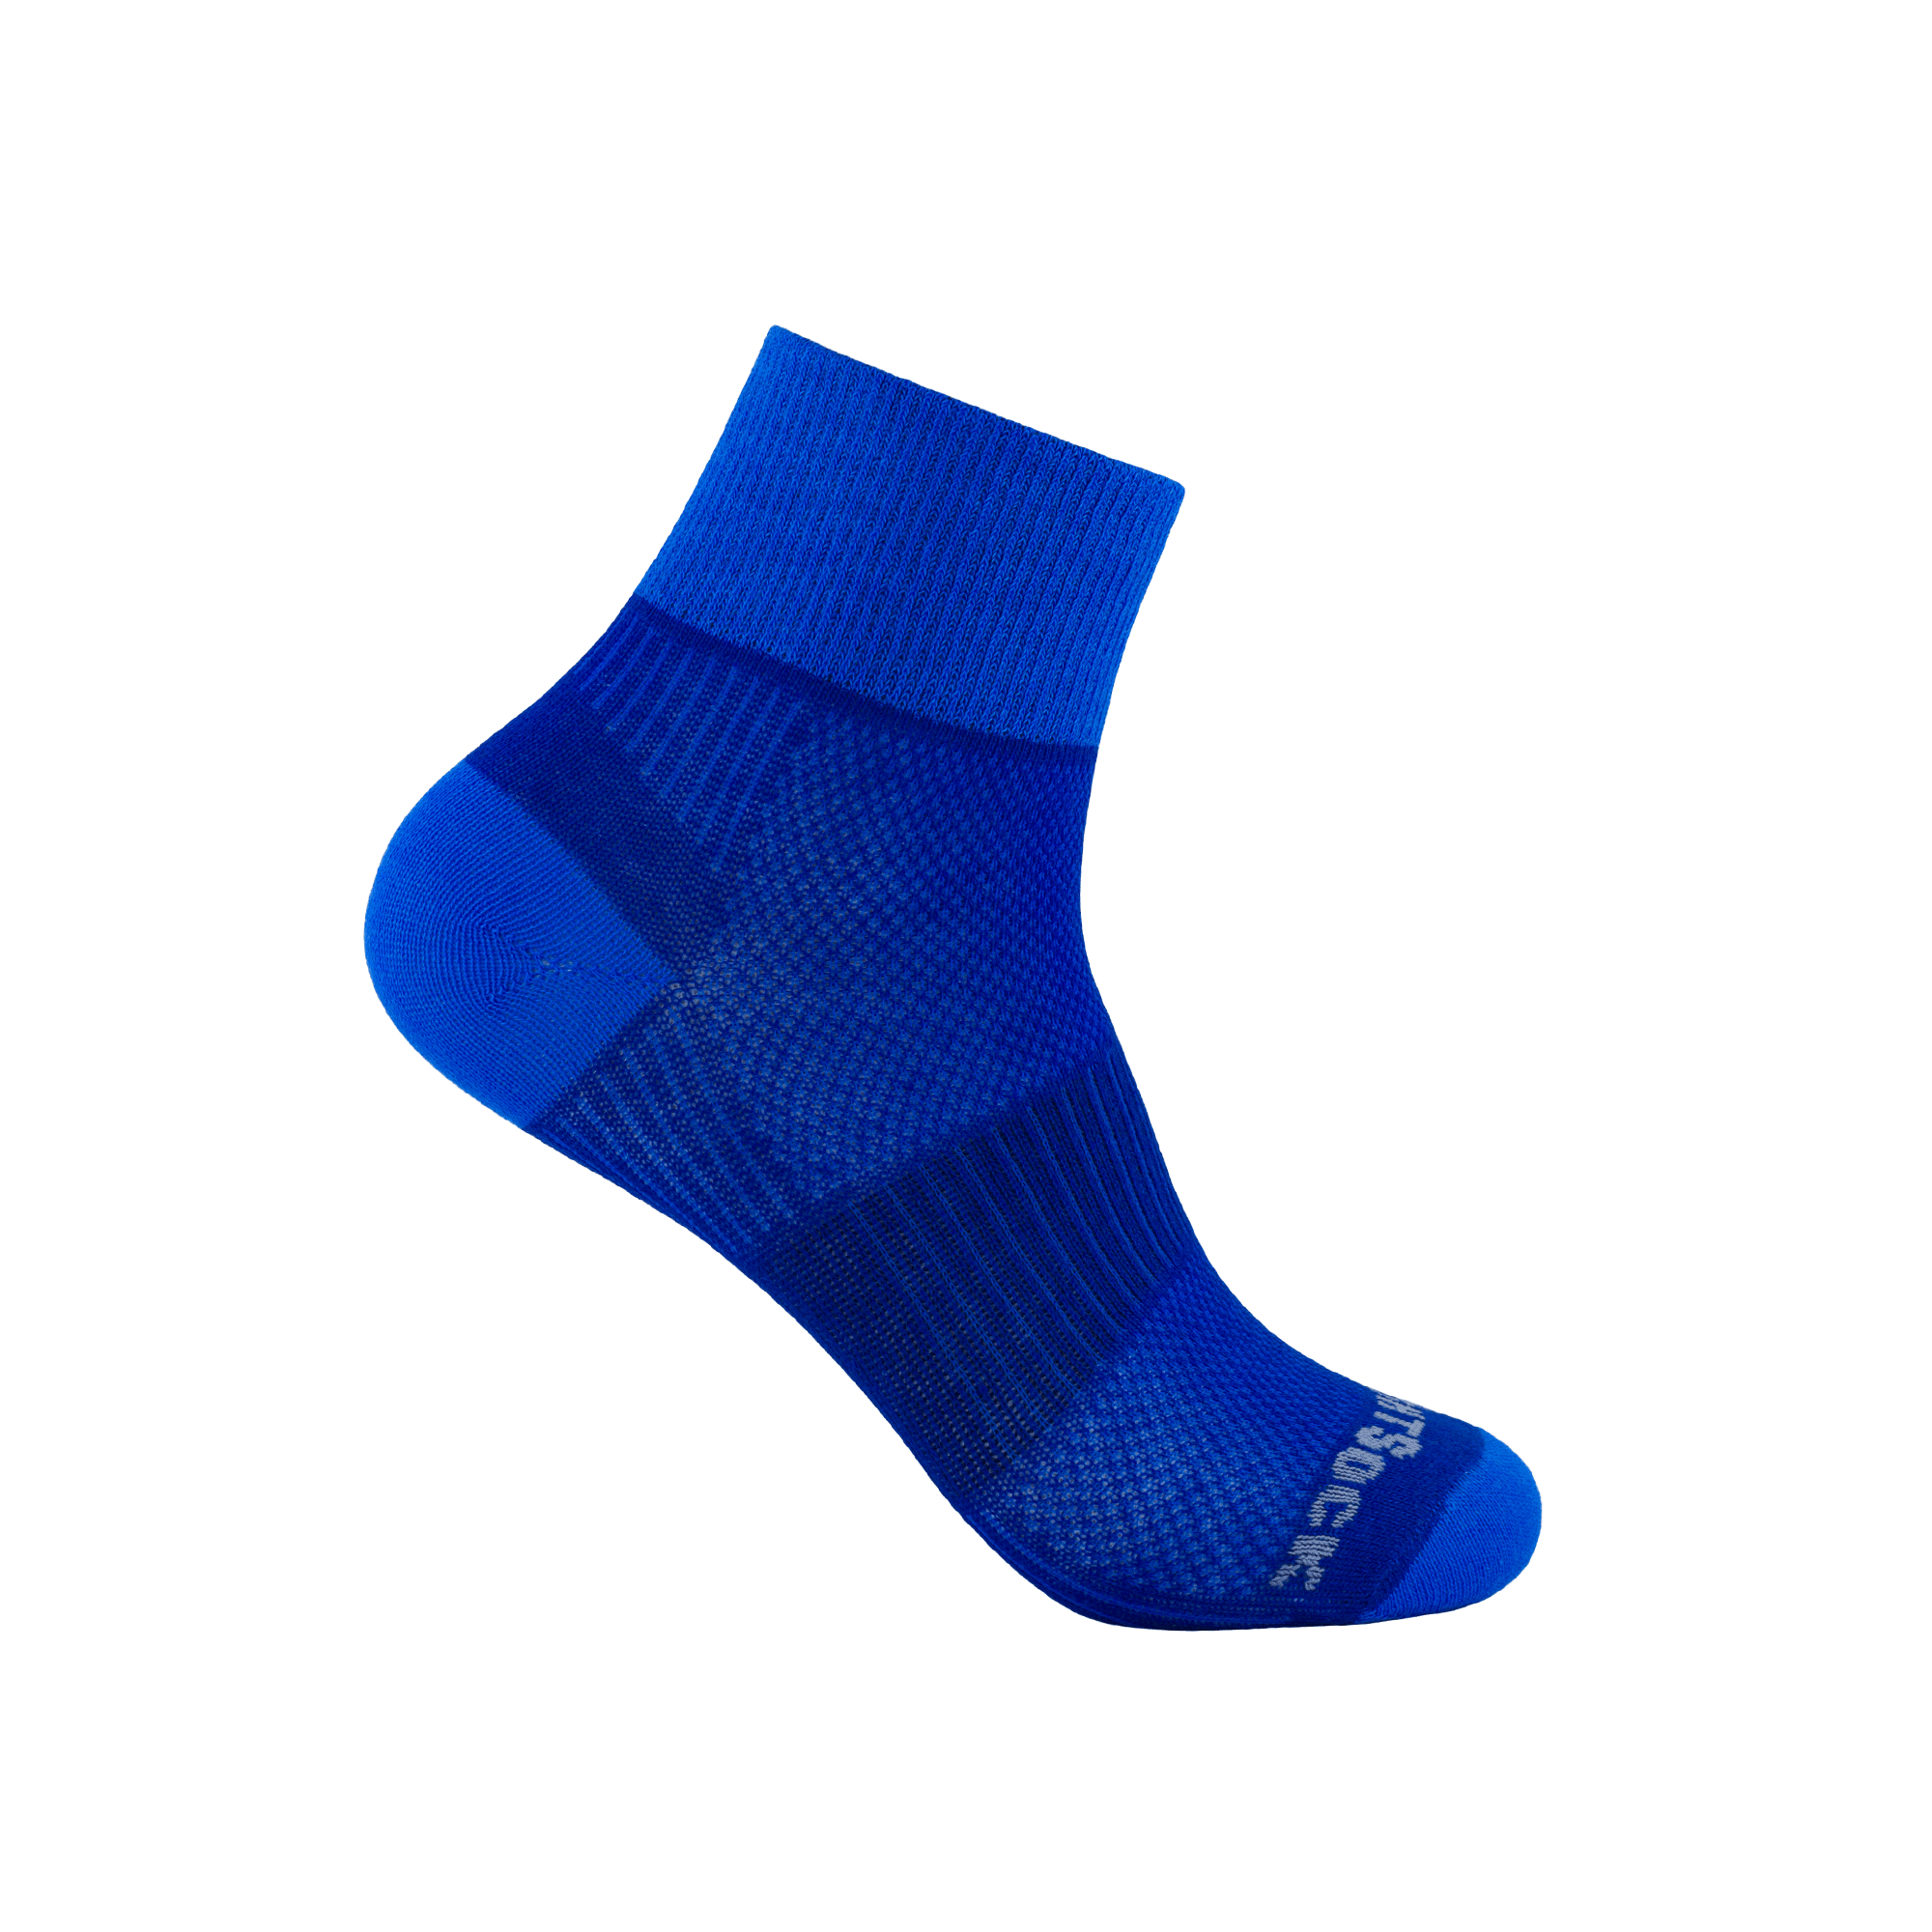 #farbe_royal-blue | WRIGHTSOCK doppellagige Anti-Blasen-Socken - COOLMESH II Quarter - royal-blue